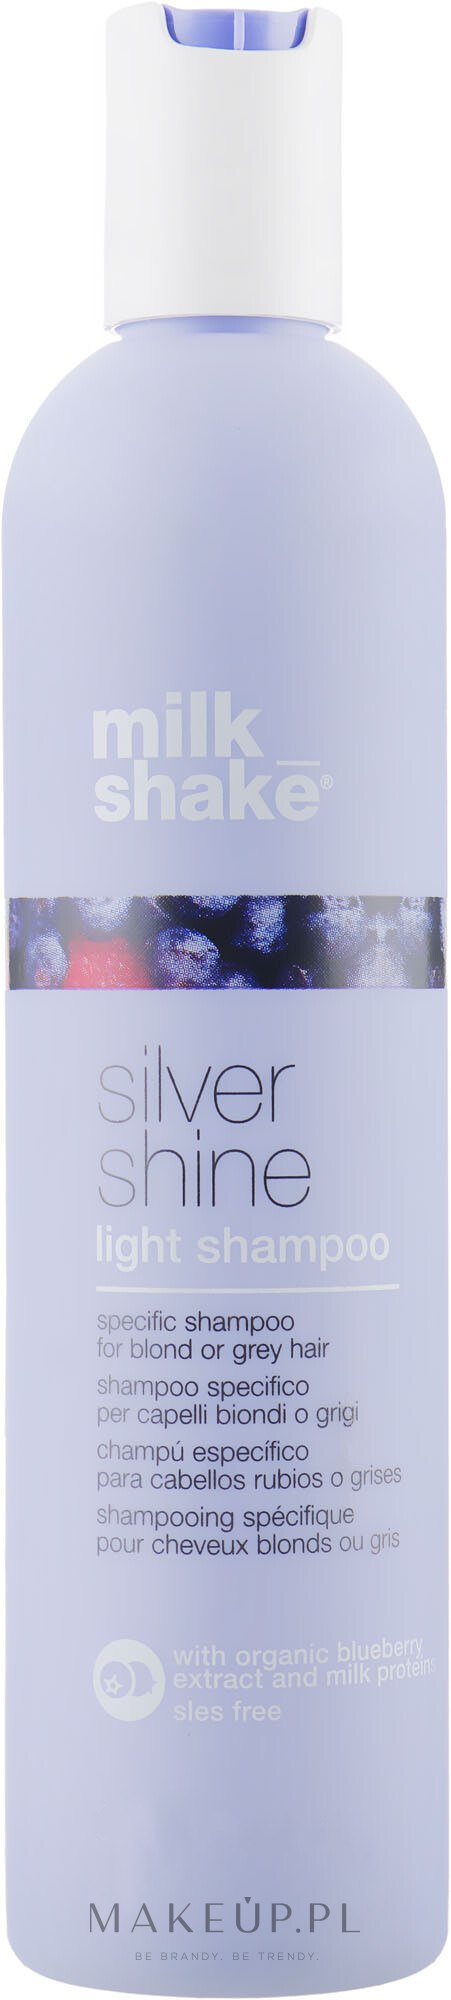 milkshake silver szampon